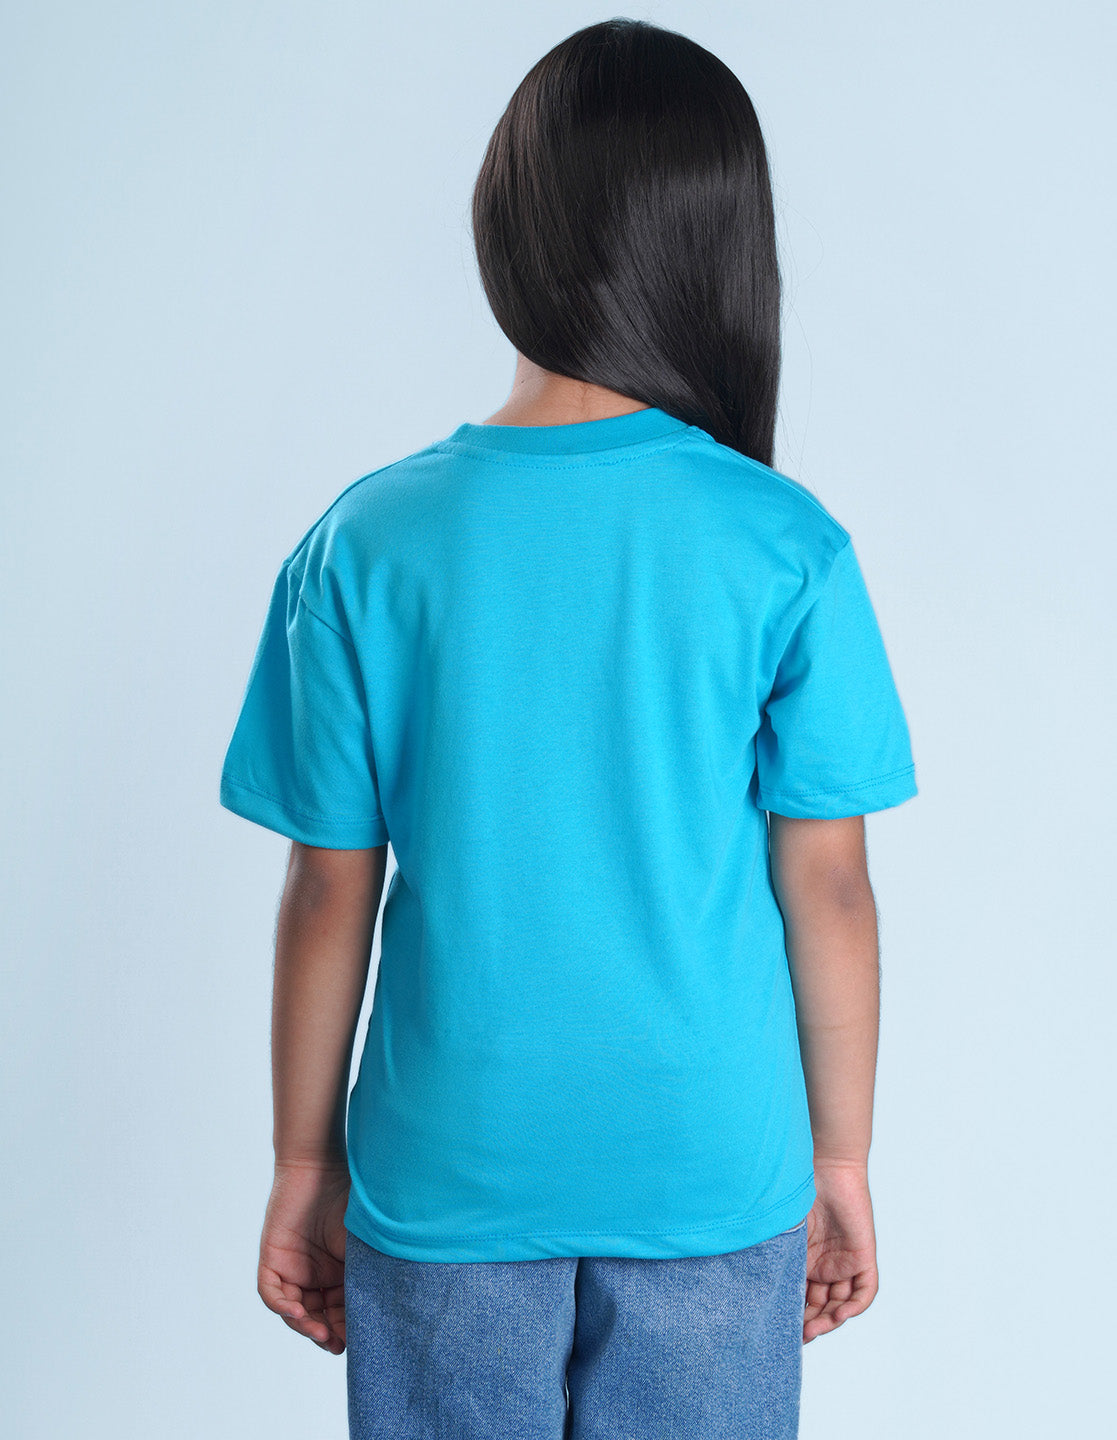 Nusyl Girls Solid Sky Blue Oversized T-shirt